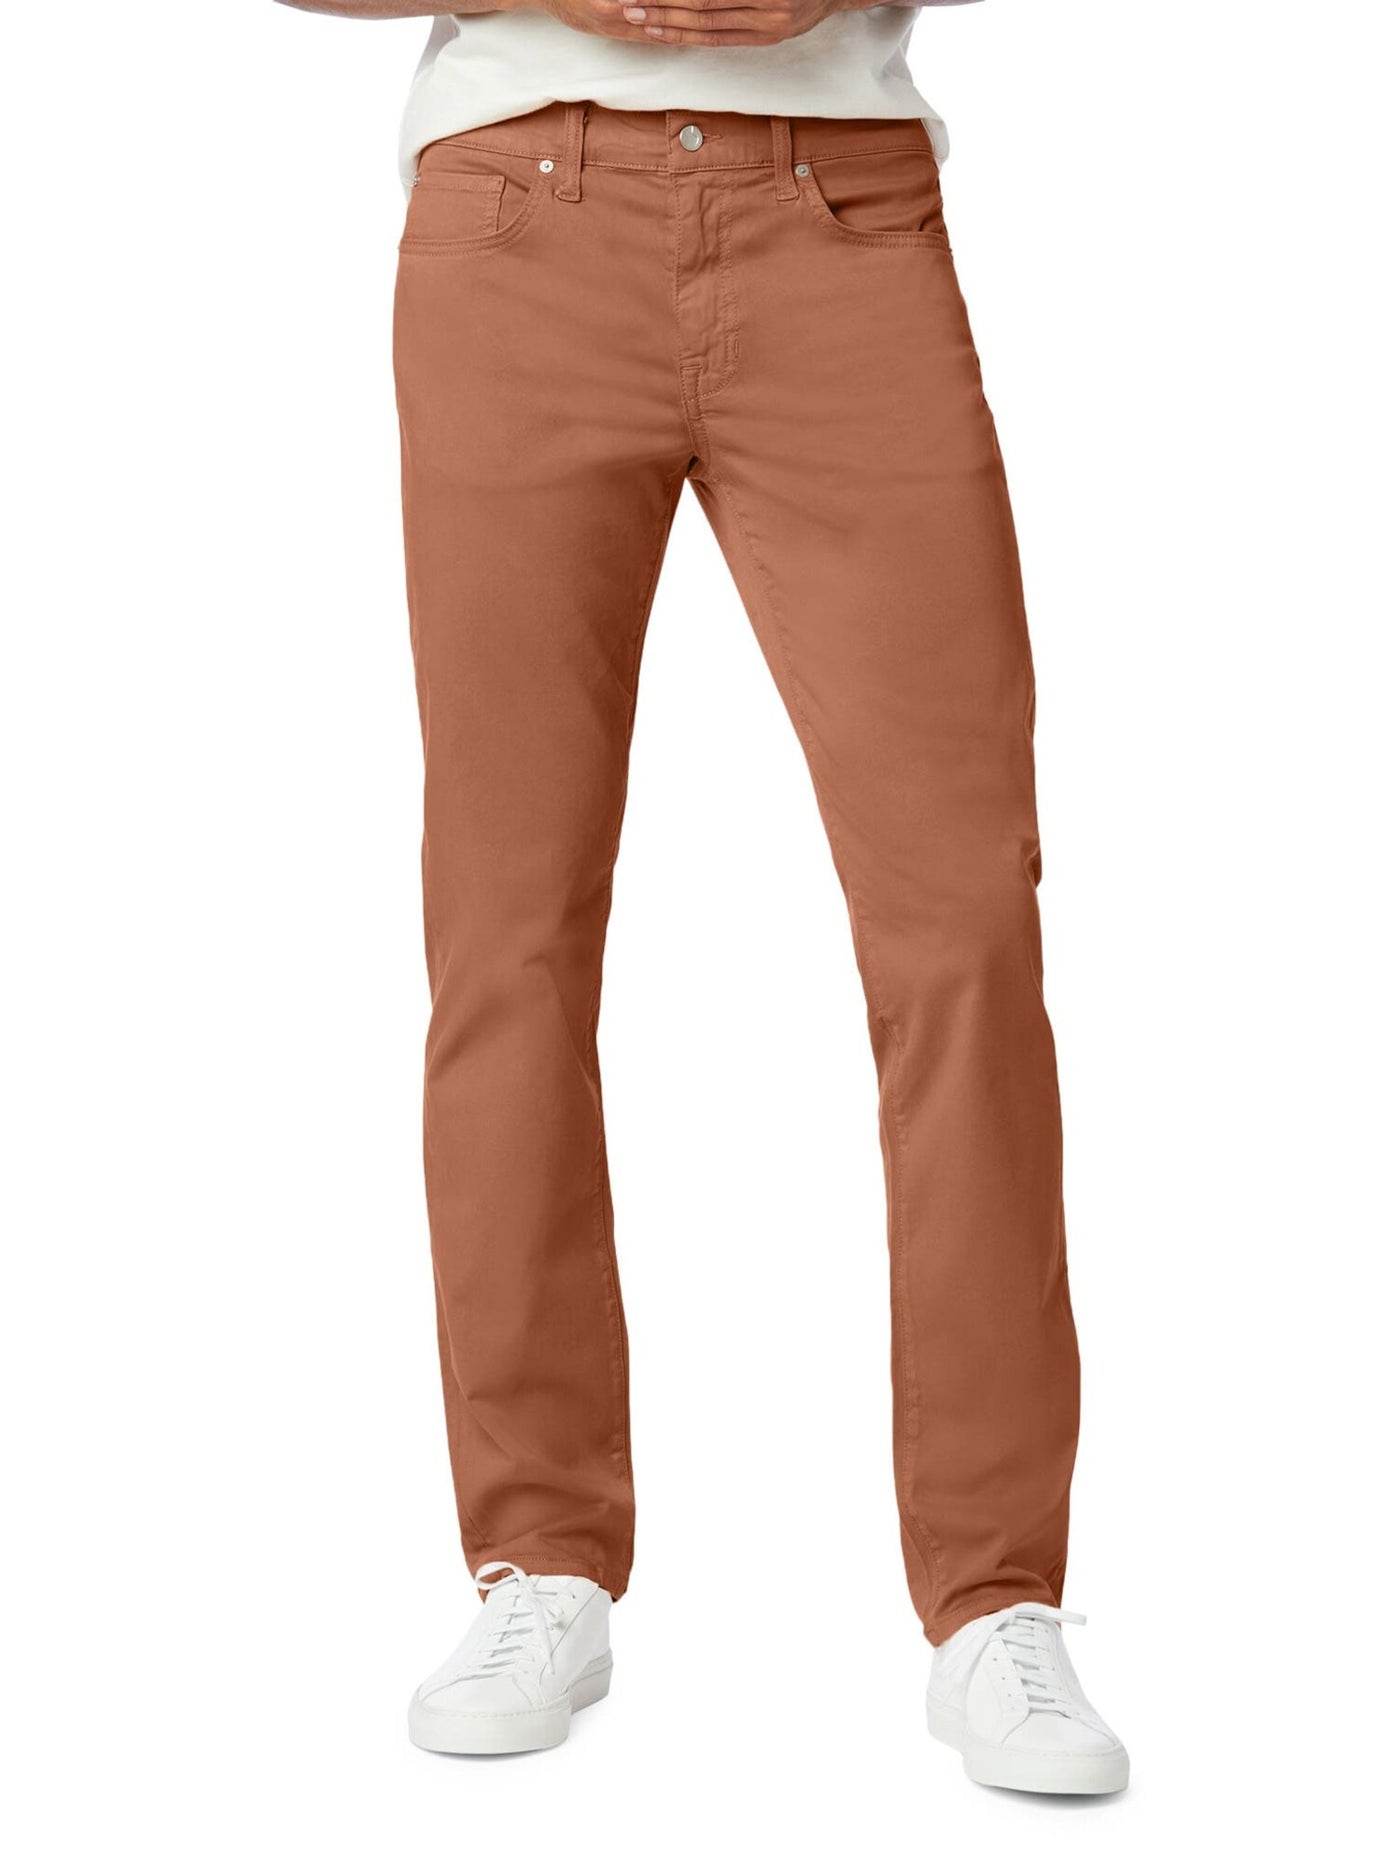 JOE'S Mens The Asher Orange Flat Front, Tapered, Slim Fit Pants 31